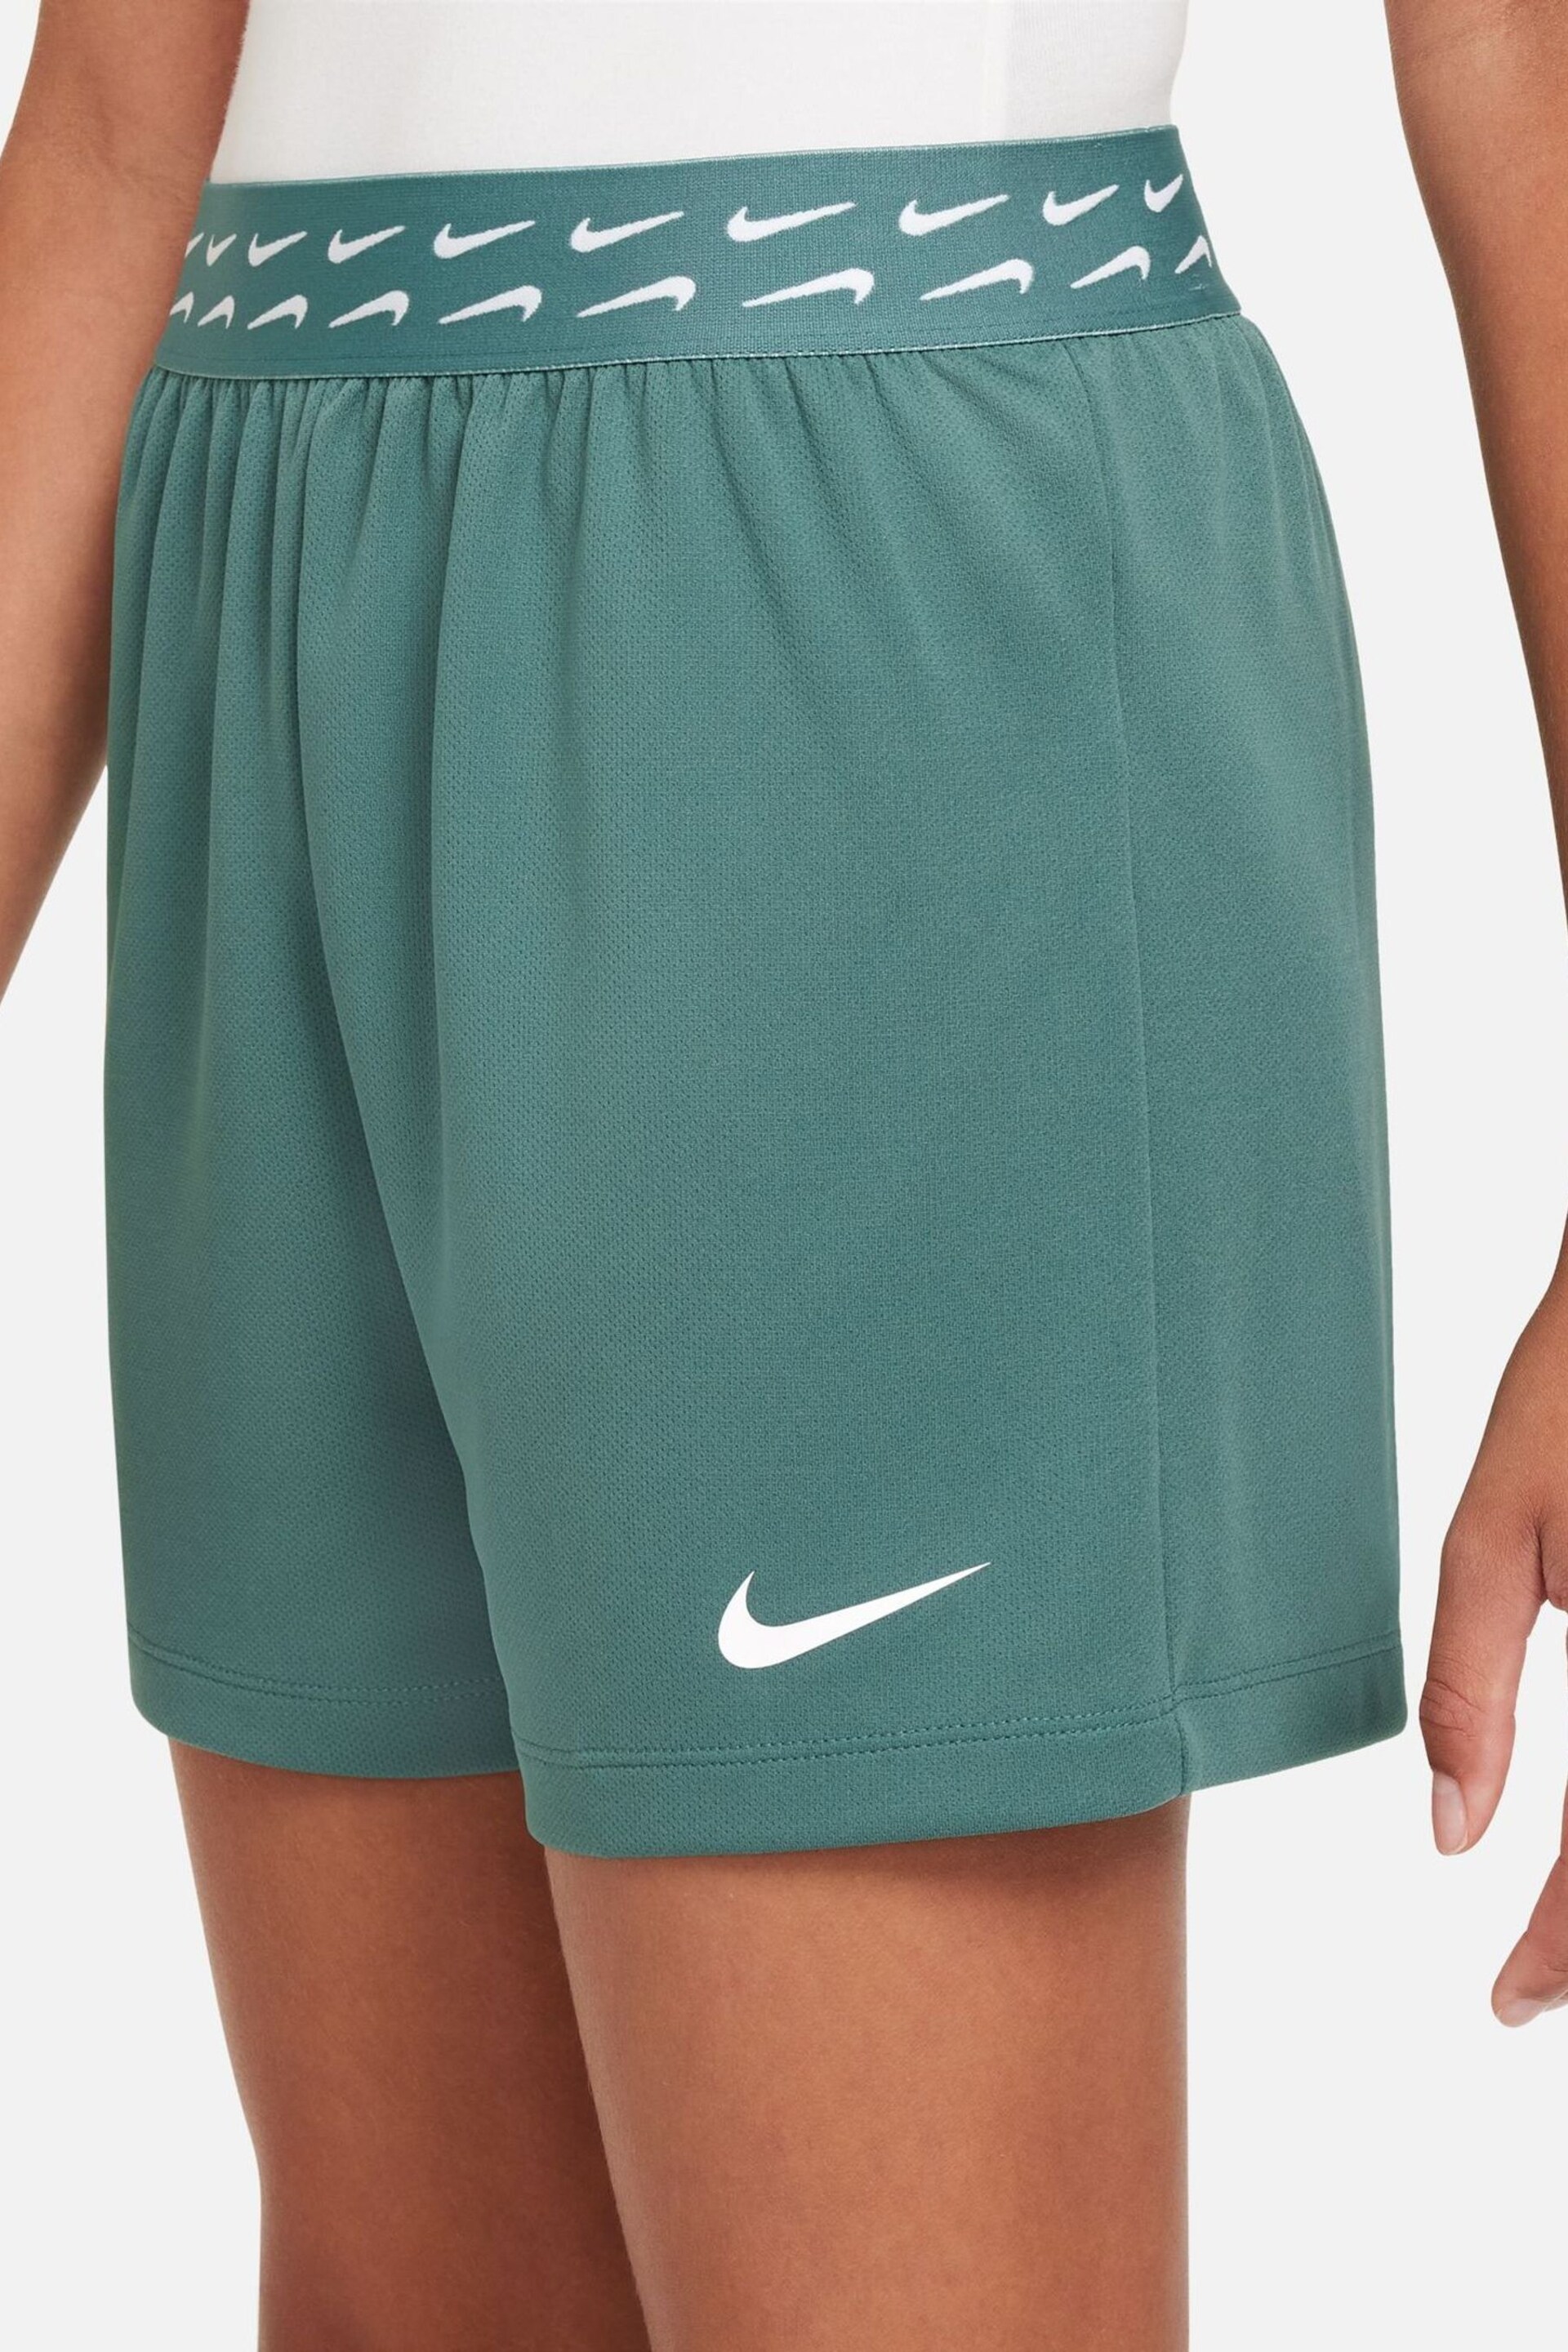 Nike Green Dri-FIT Trophy Training Shorts - Image 3 of 7